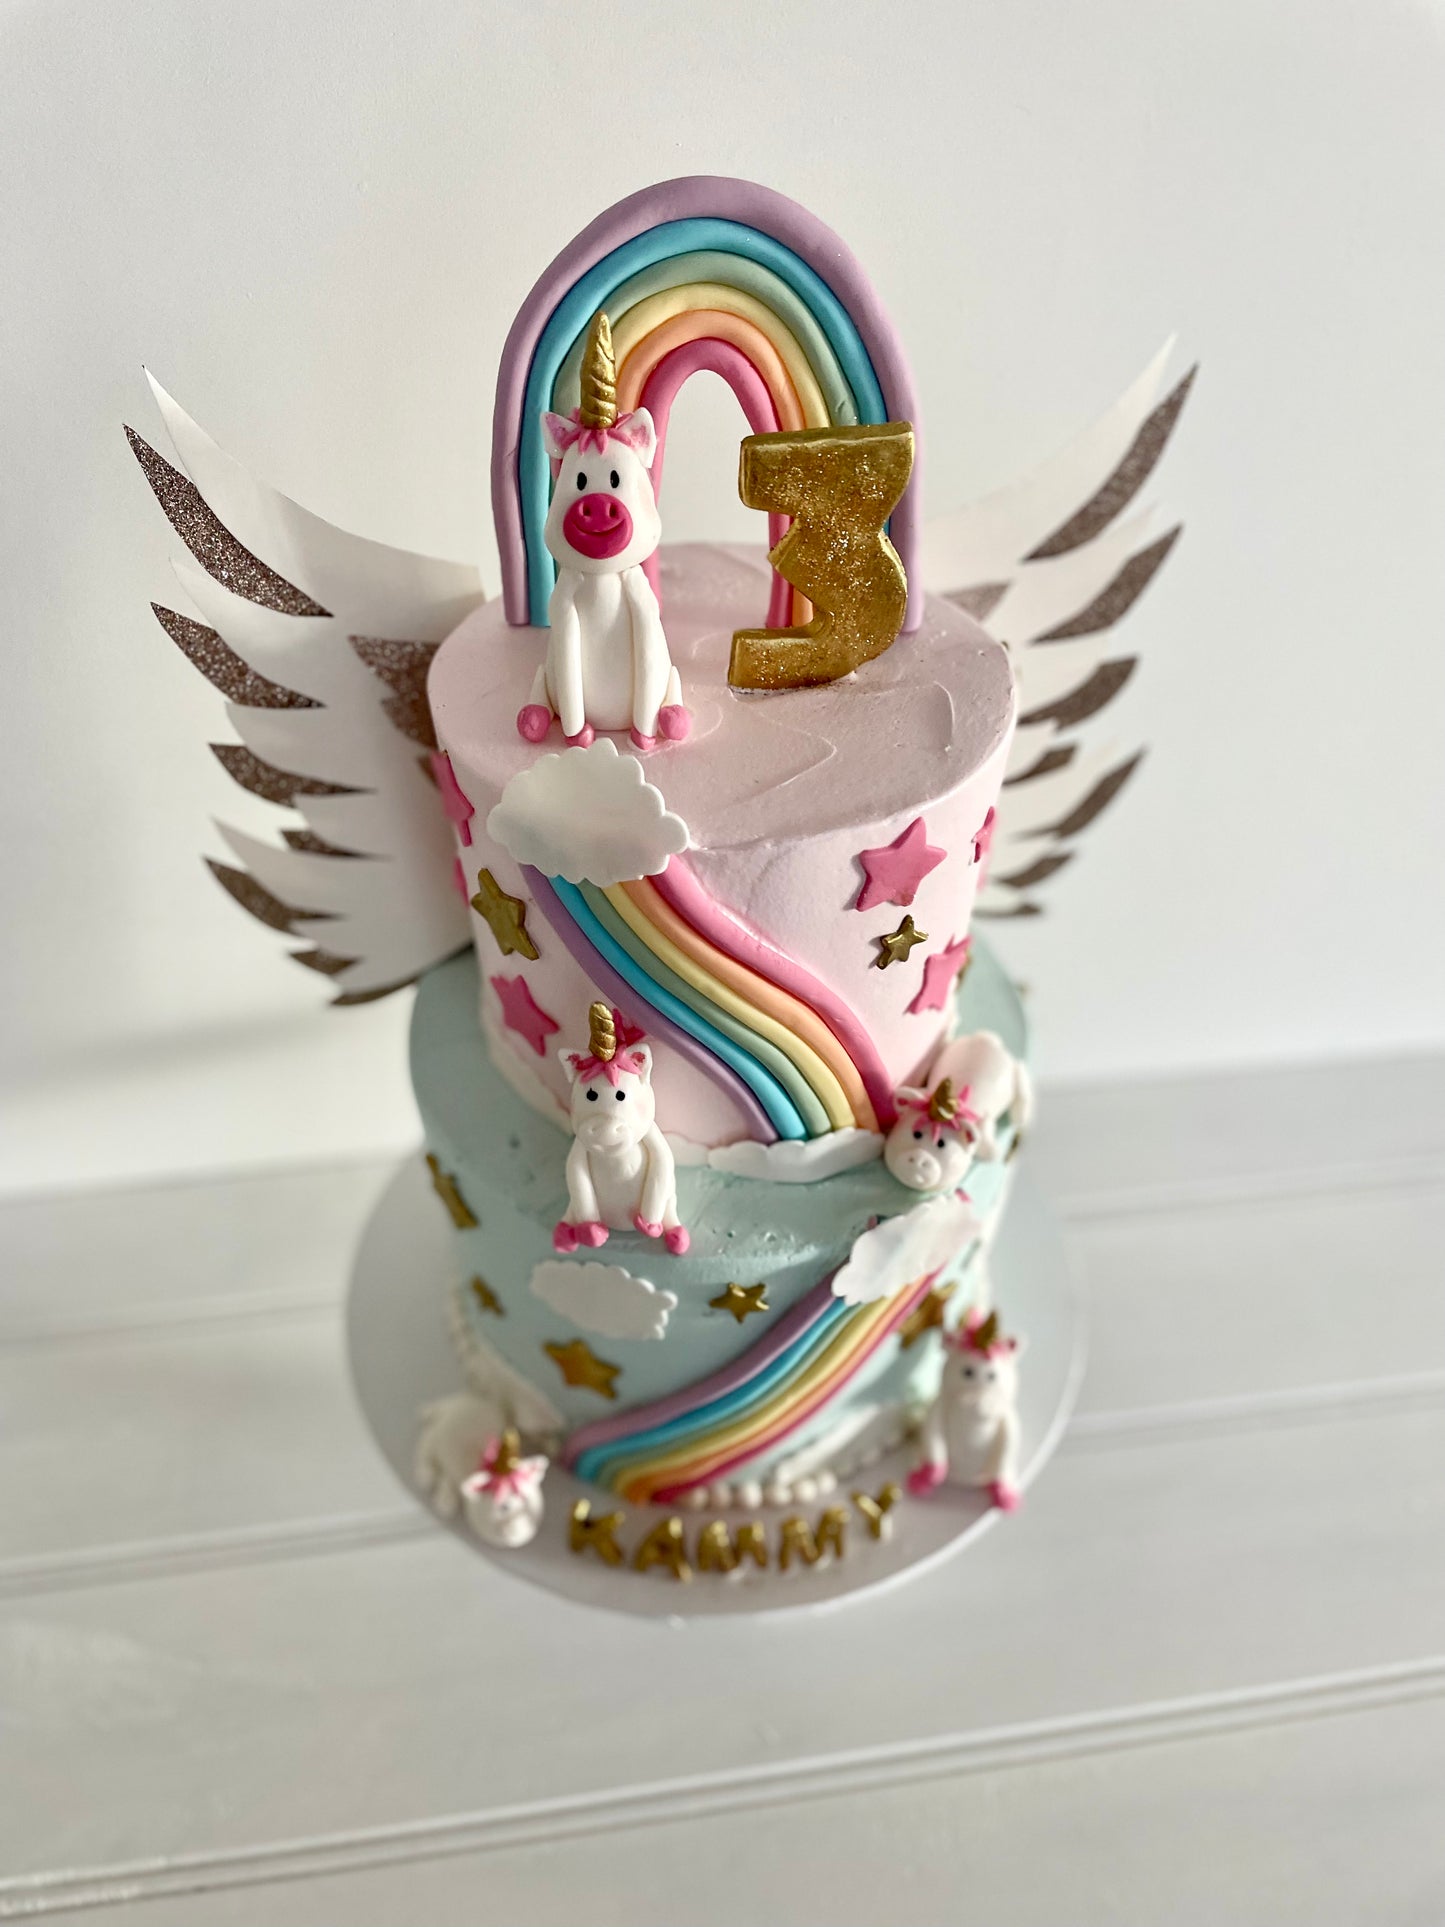 2 Tier Flying Unicorn Cake With Rainbows